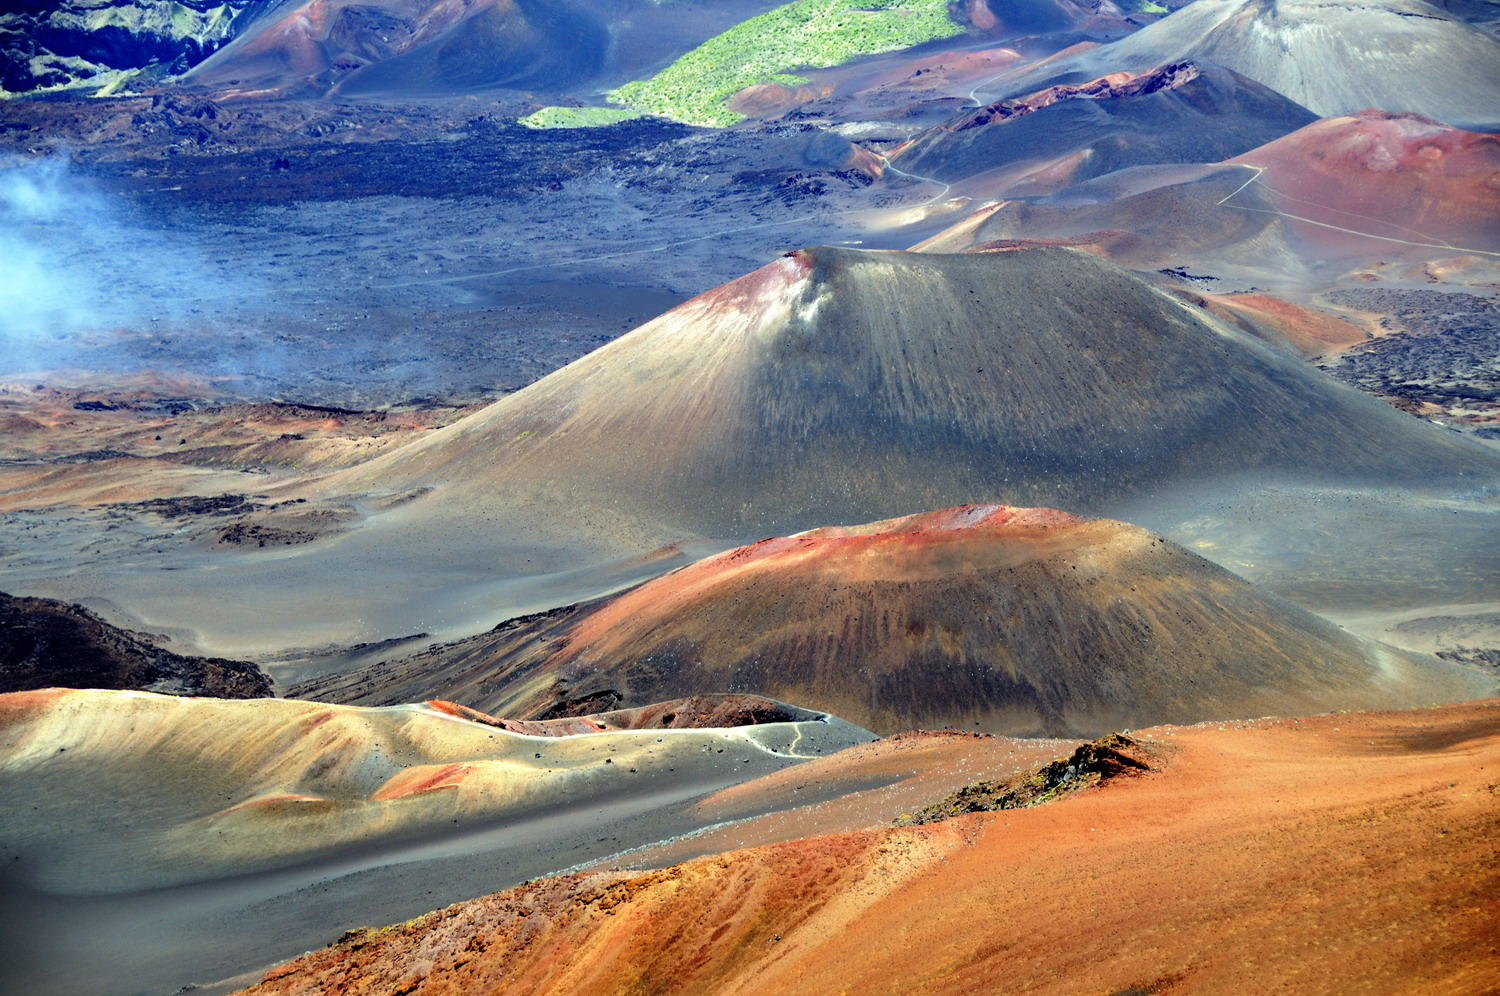 DSC_2808A1 - Haleakala Crater